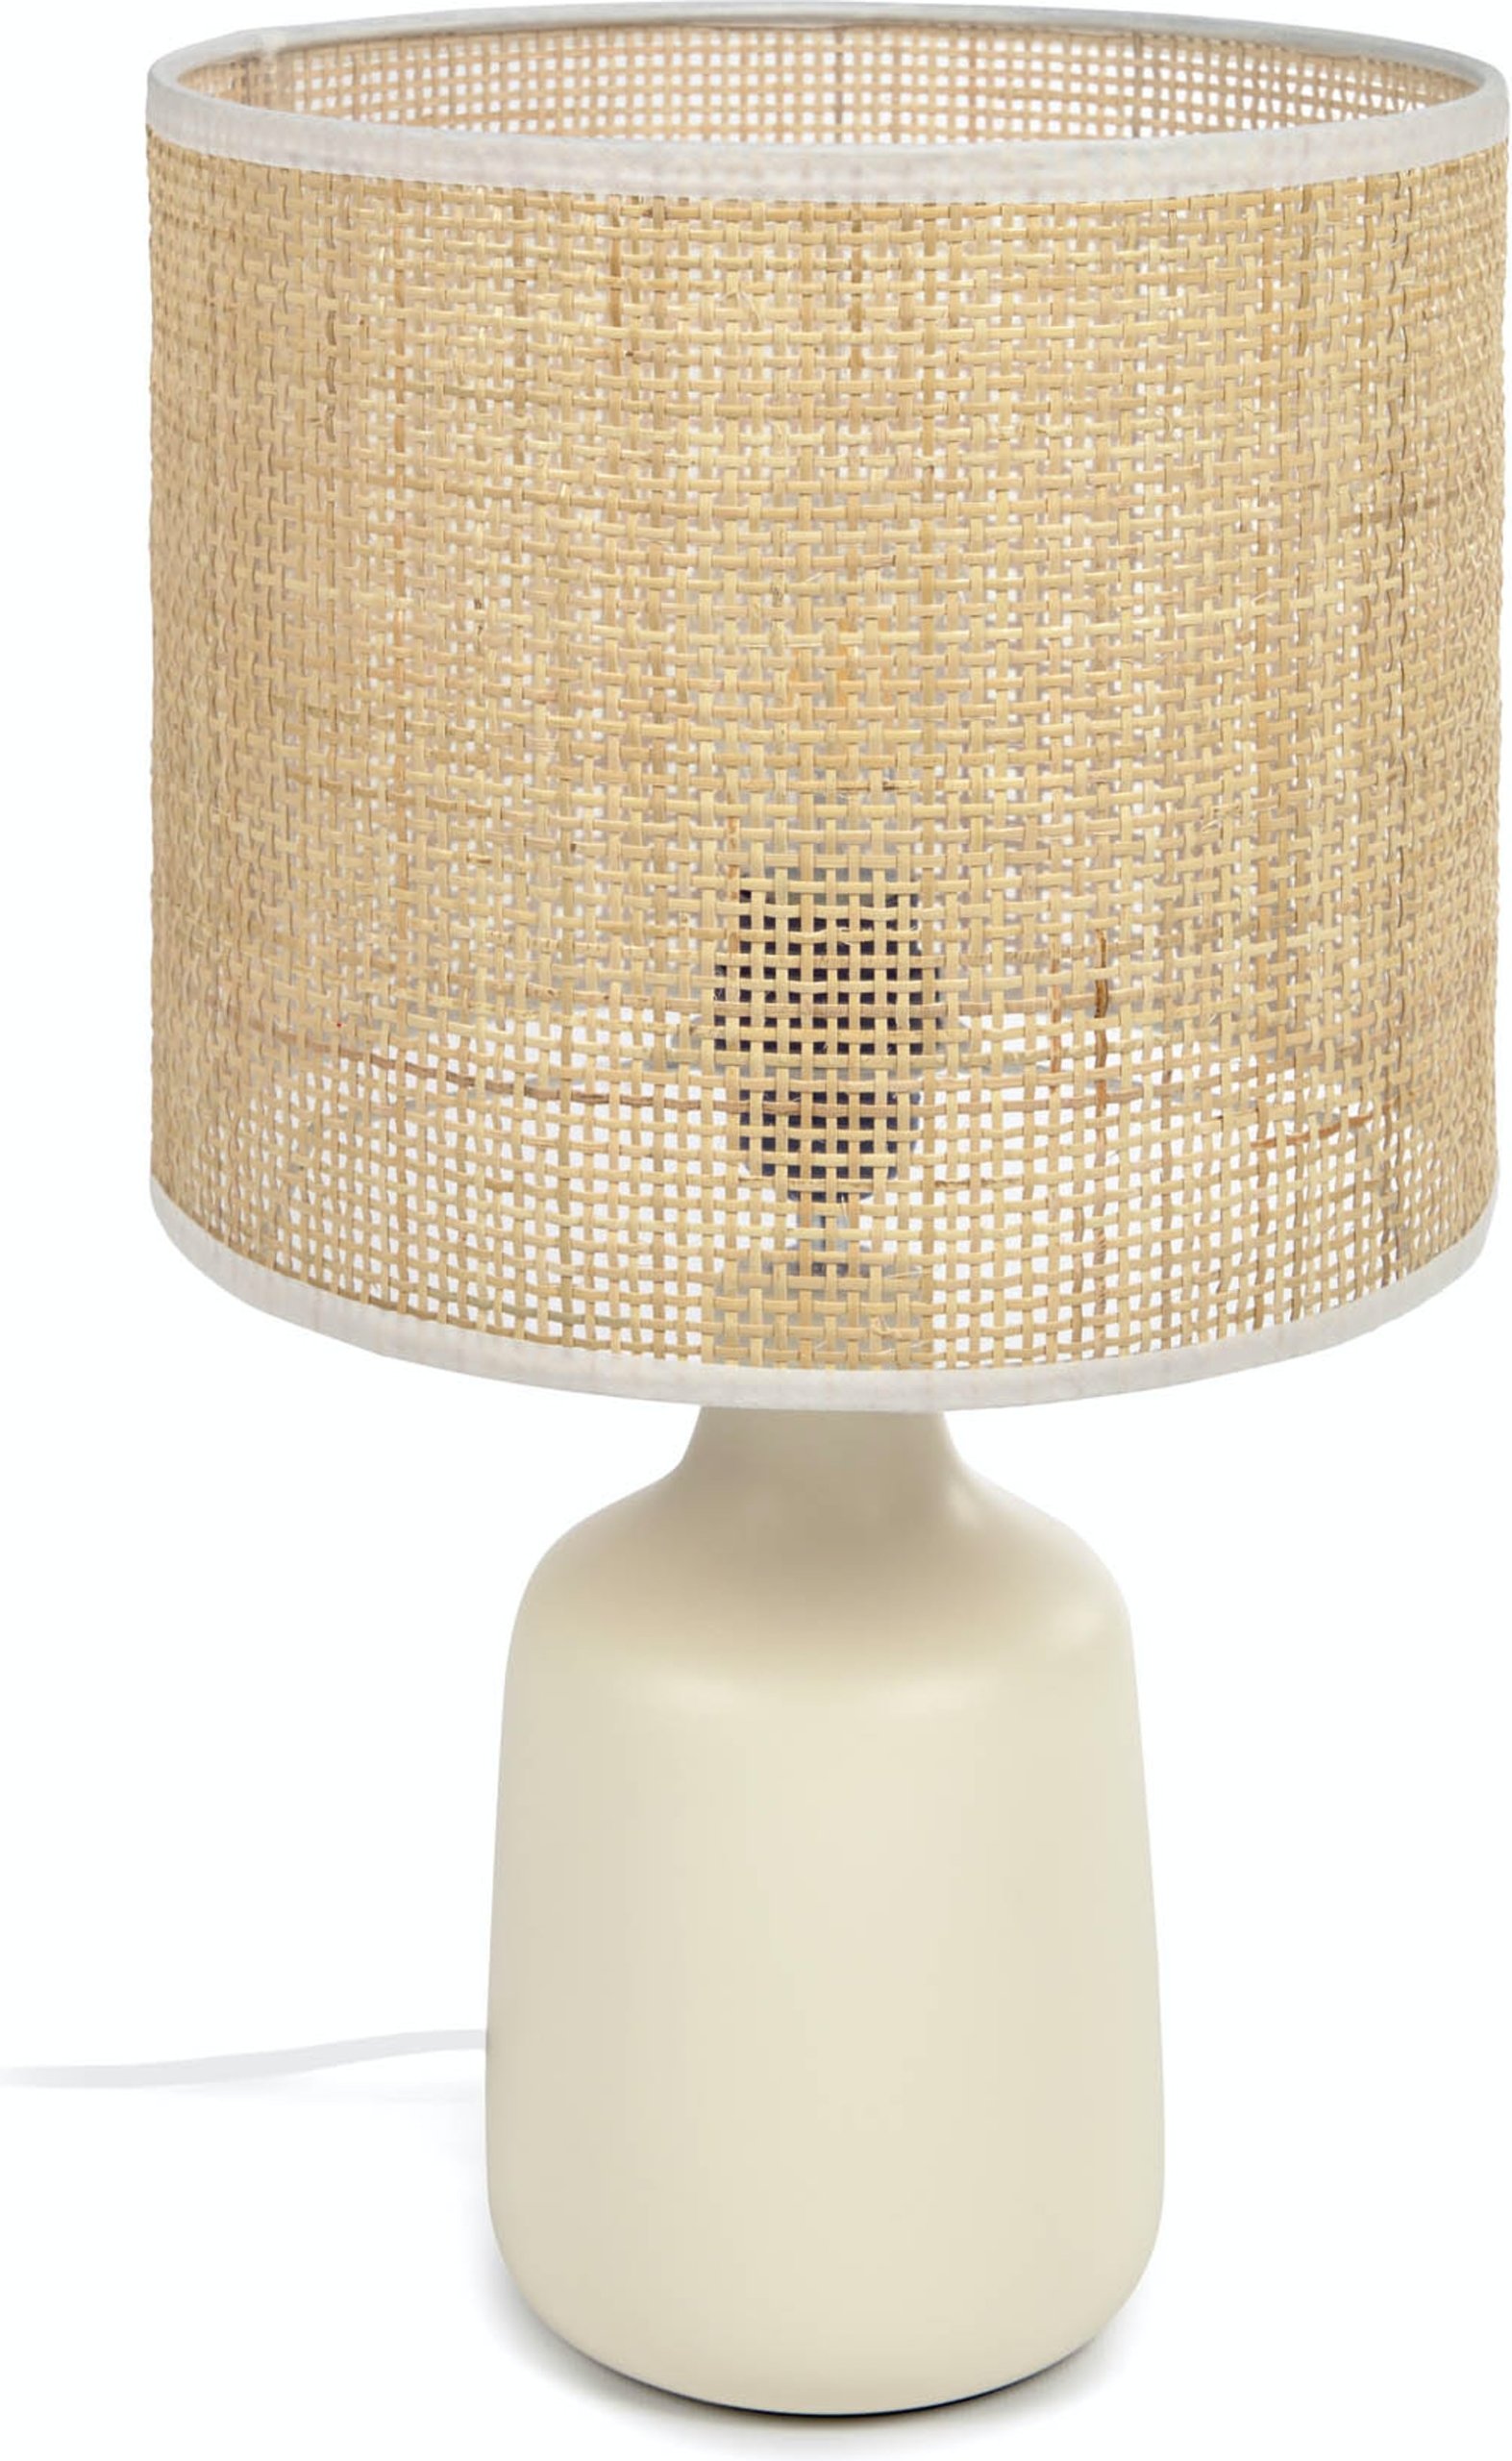 LAFORMA Erna bordlampe i hvid keramik og bambus med naturlig finish